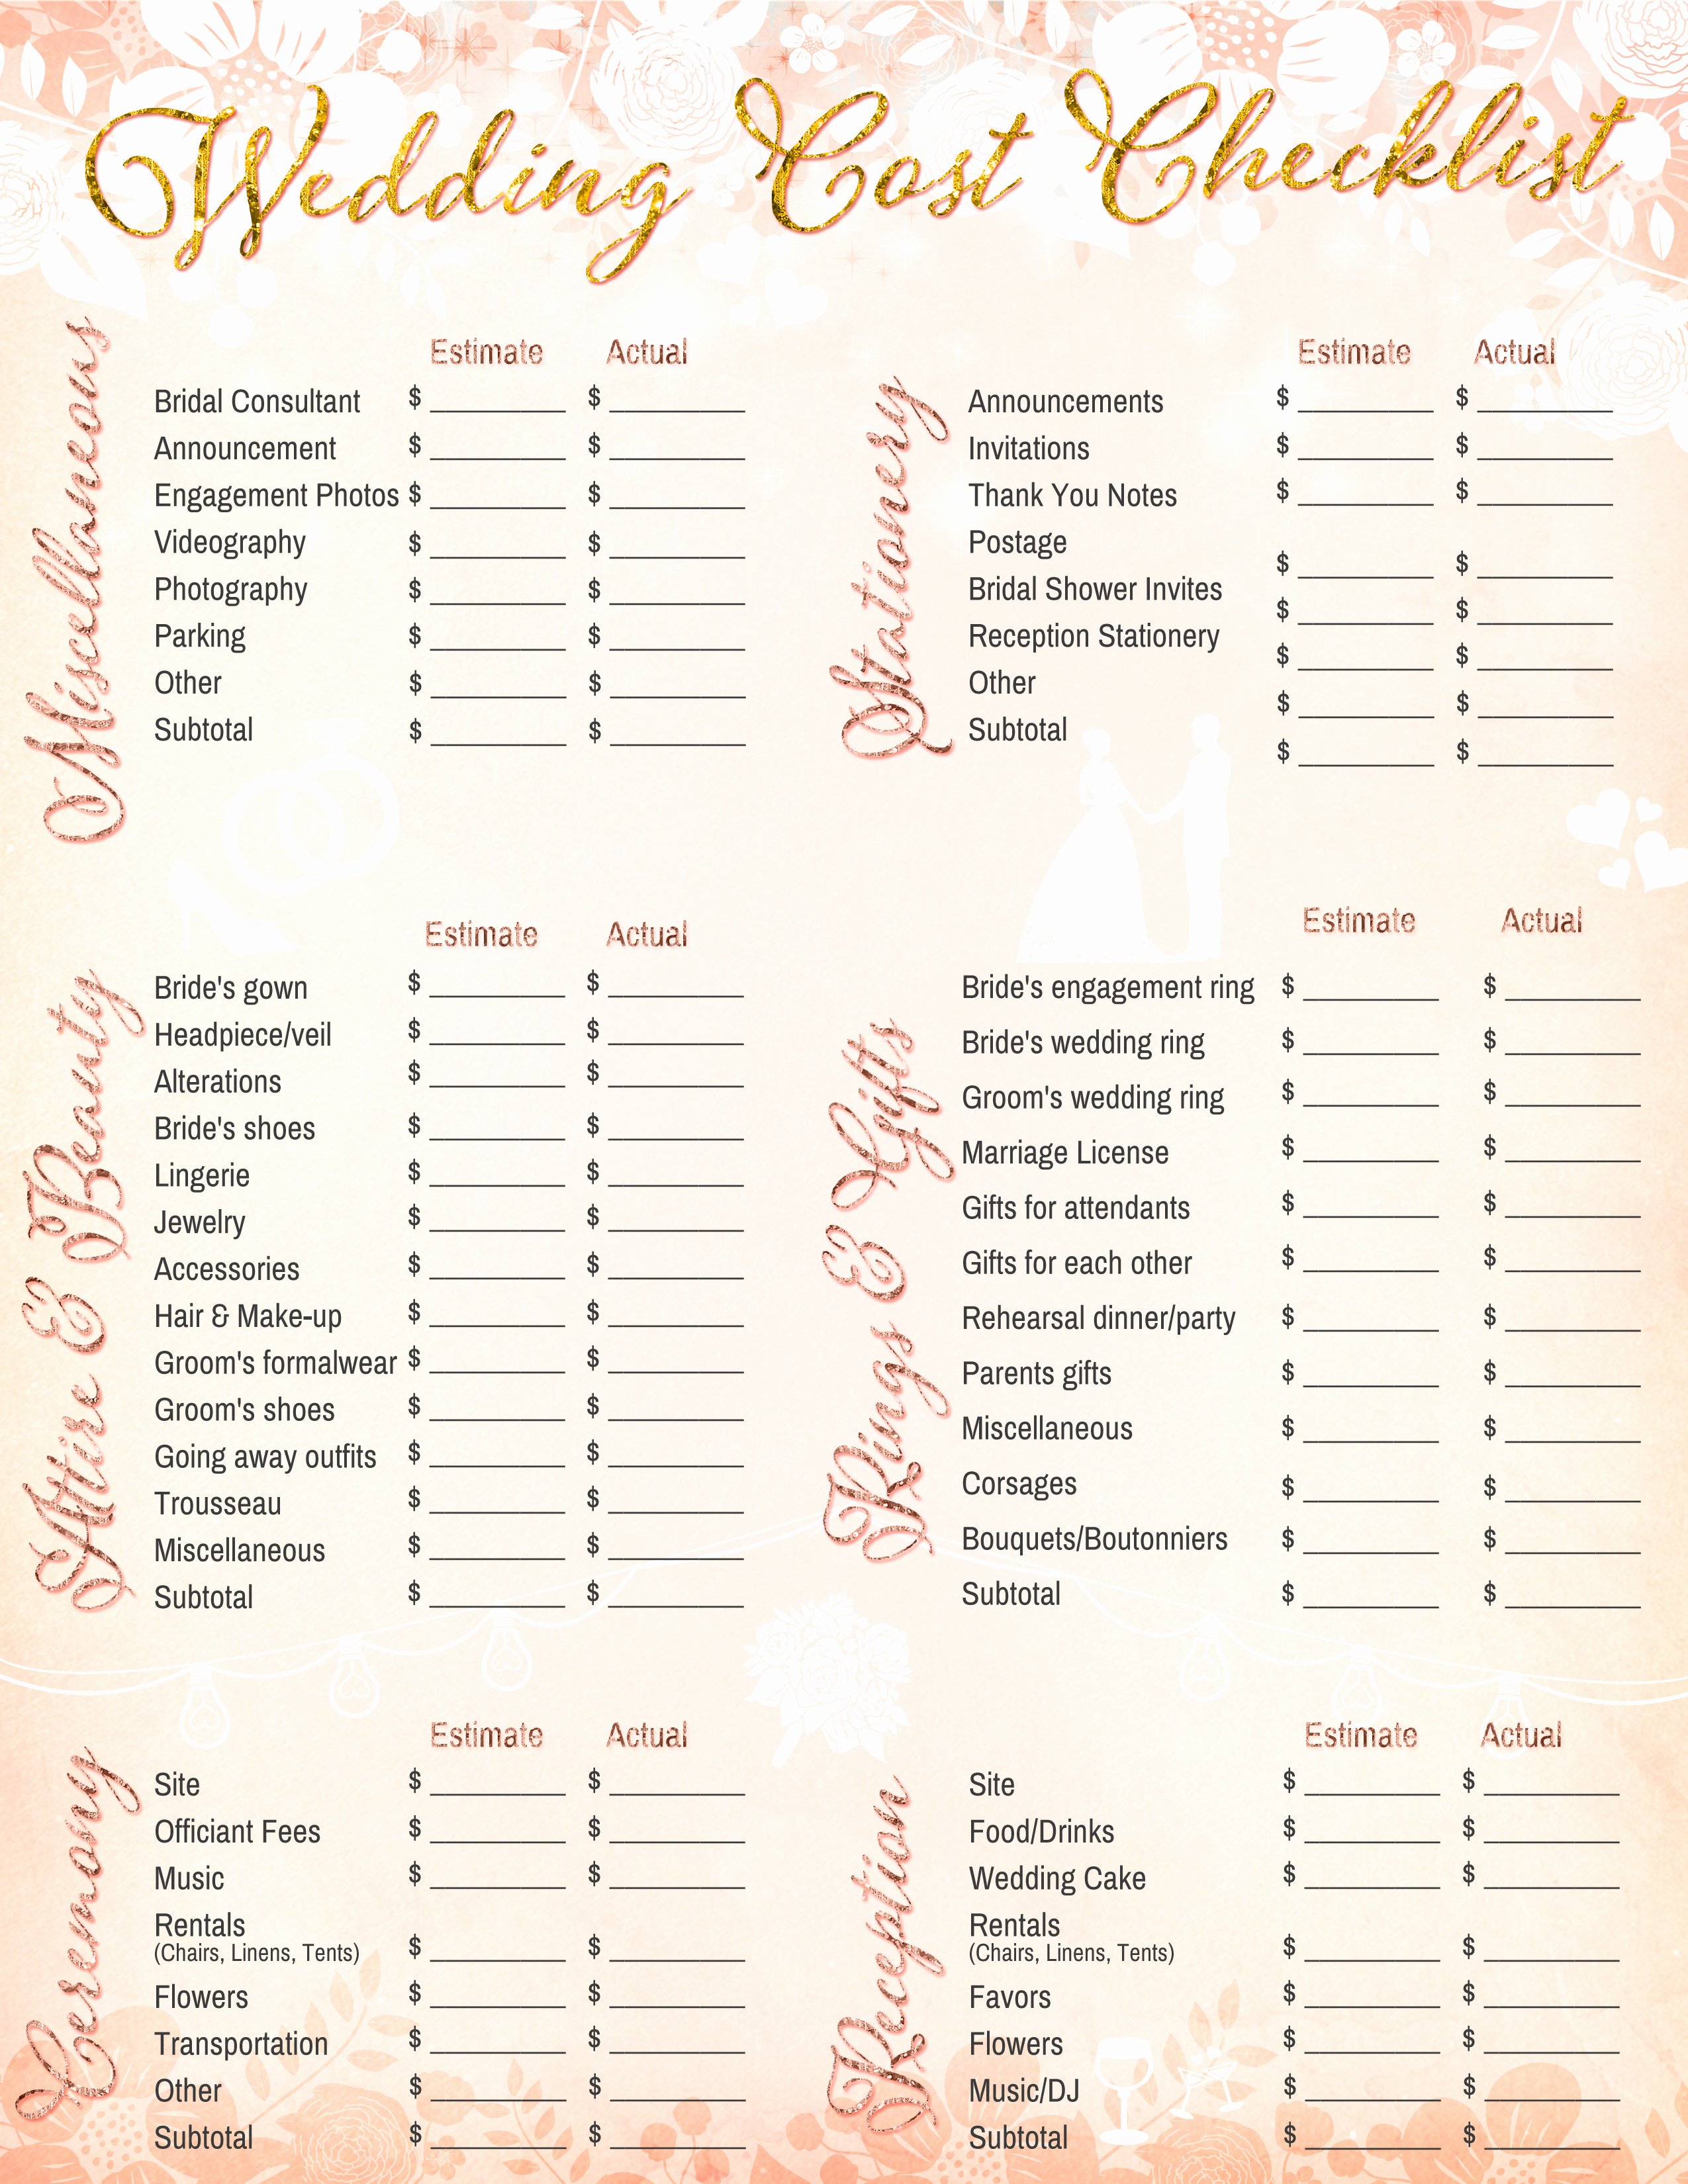 Wedding Venue Checklist Printable Awesome Free Printable Wedding Cost Checklist